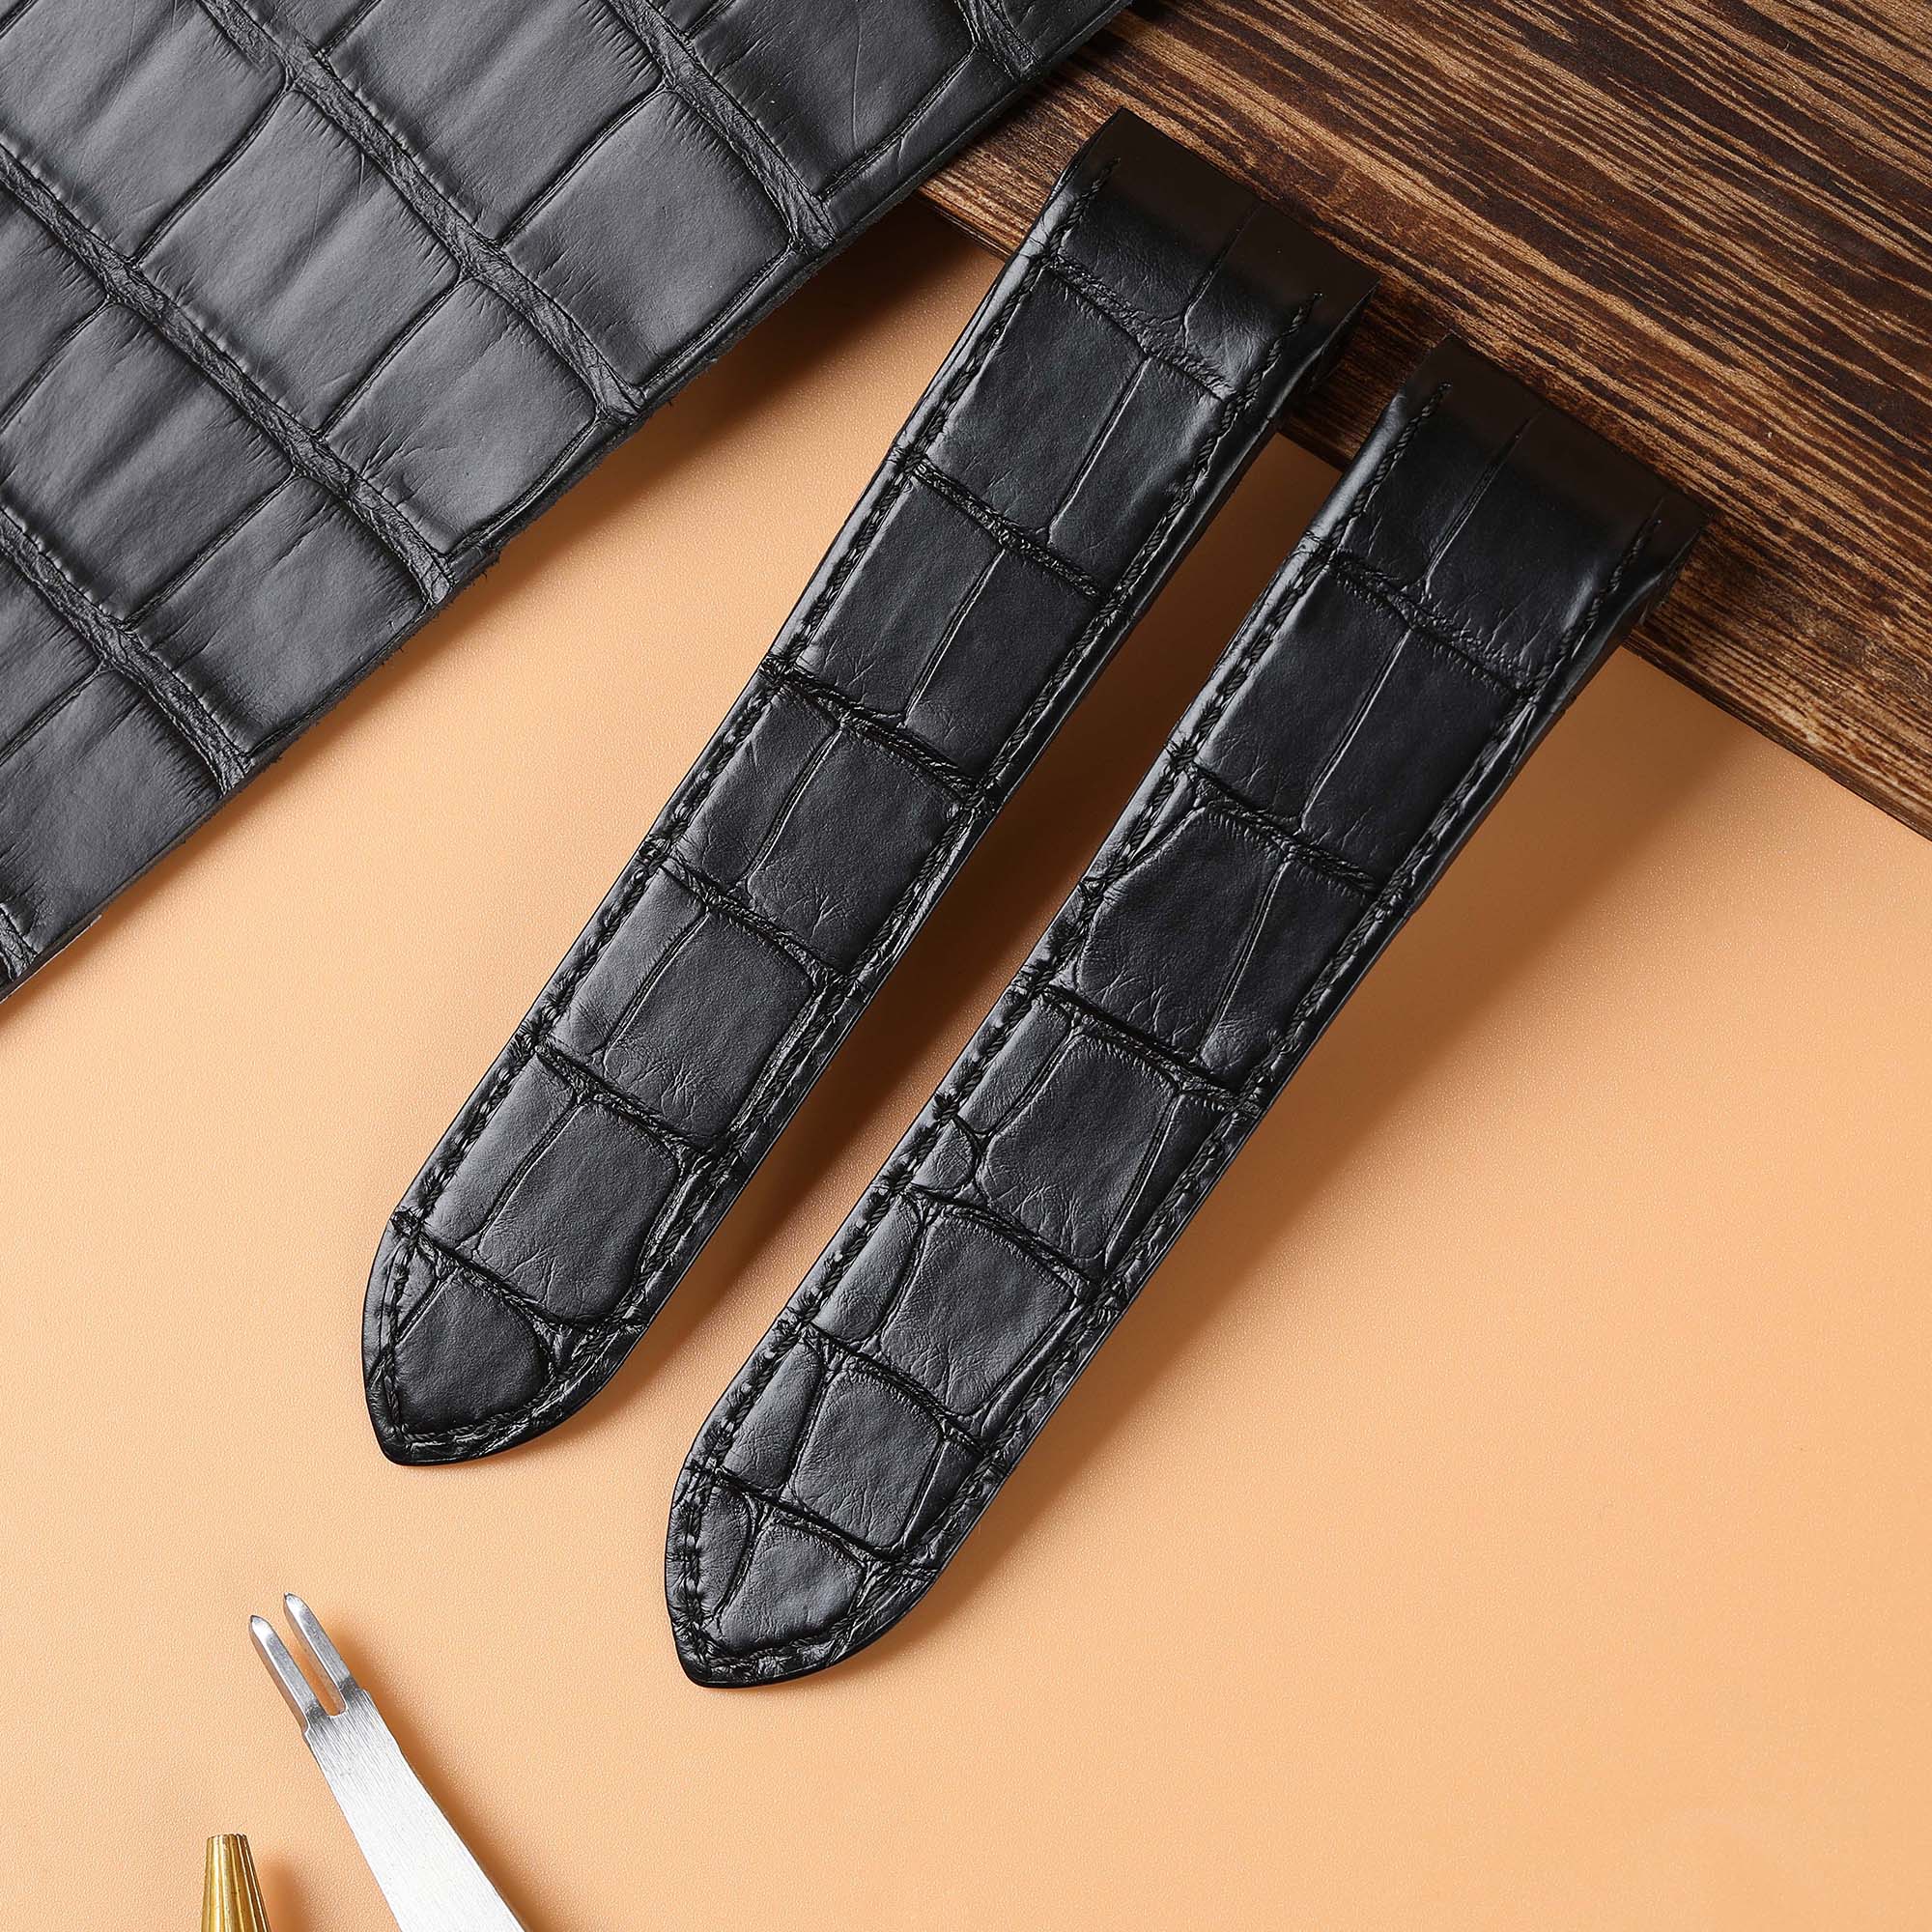 Custom black alligator leather watch bands for Cartier Santos 100 strap